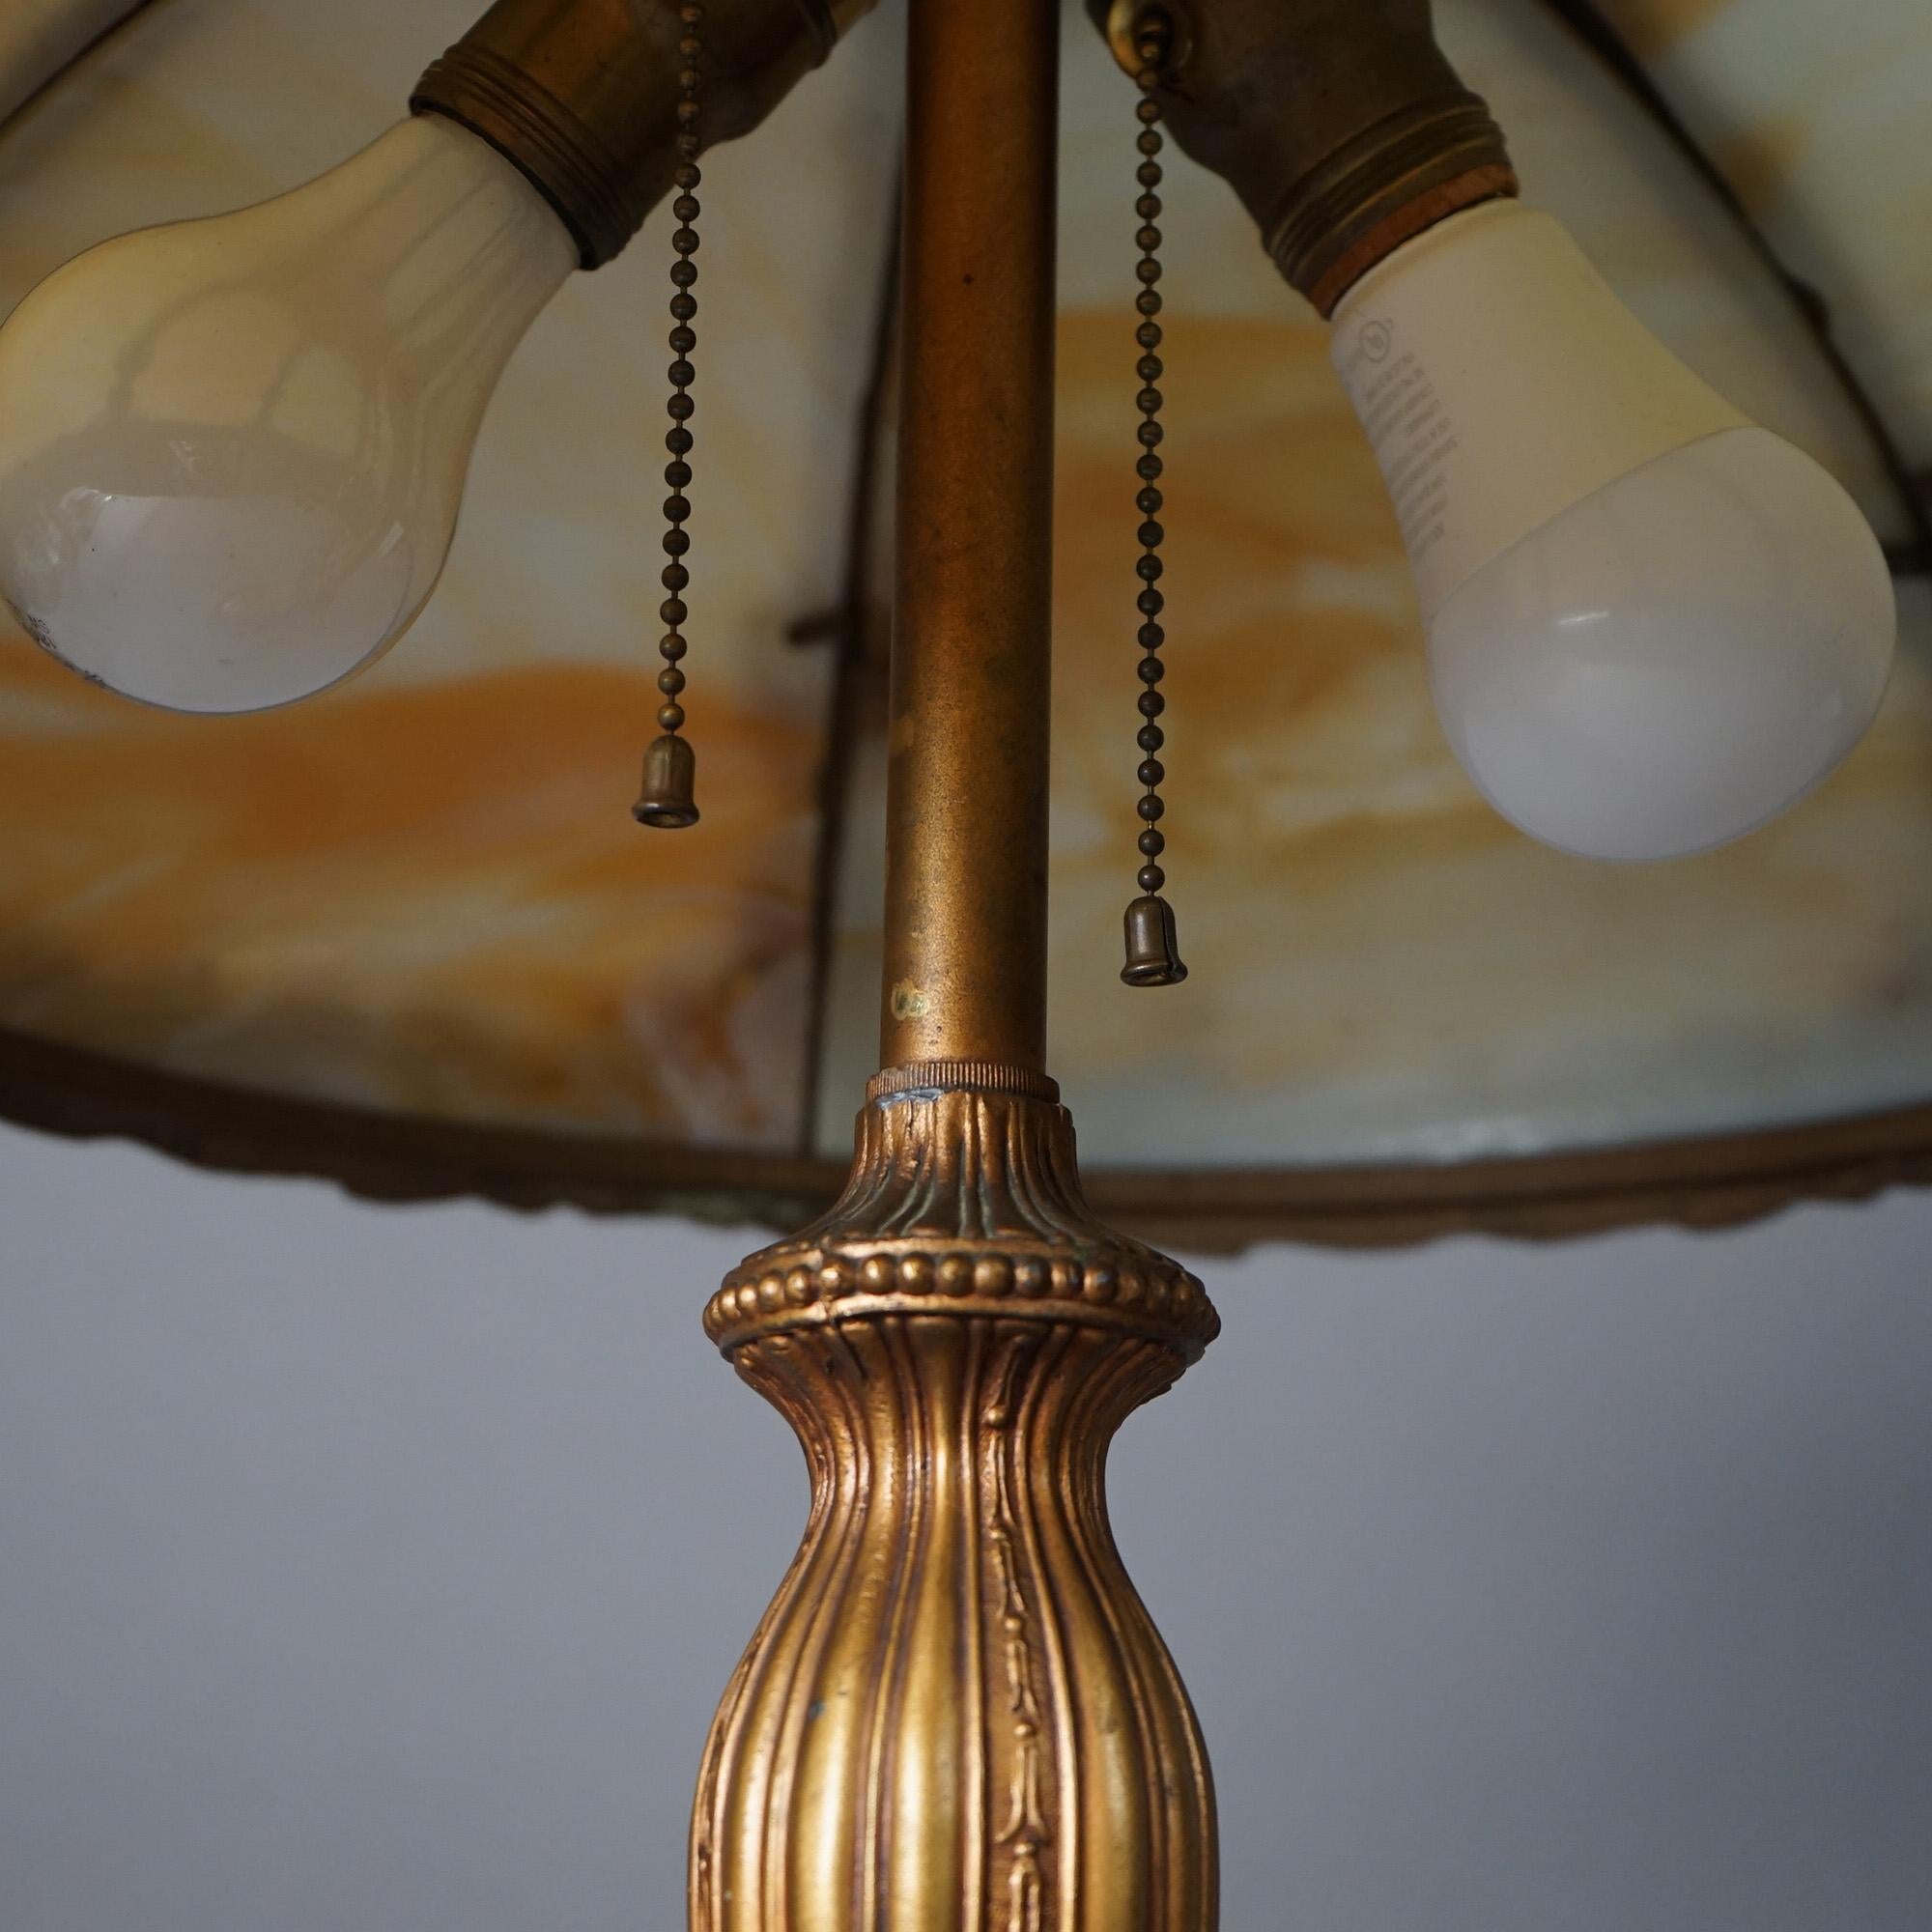 Cast Antique Arts & Crafts Bradley & Hubbard School Slag Glass Table Lamp c1920 For Sale